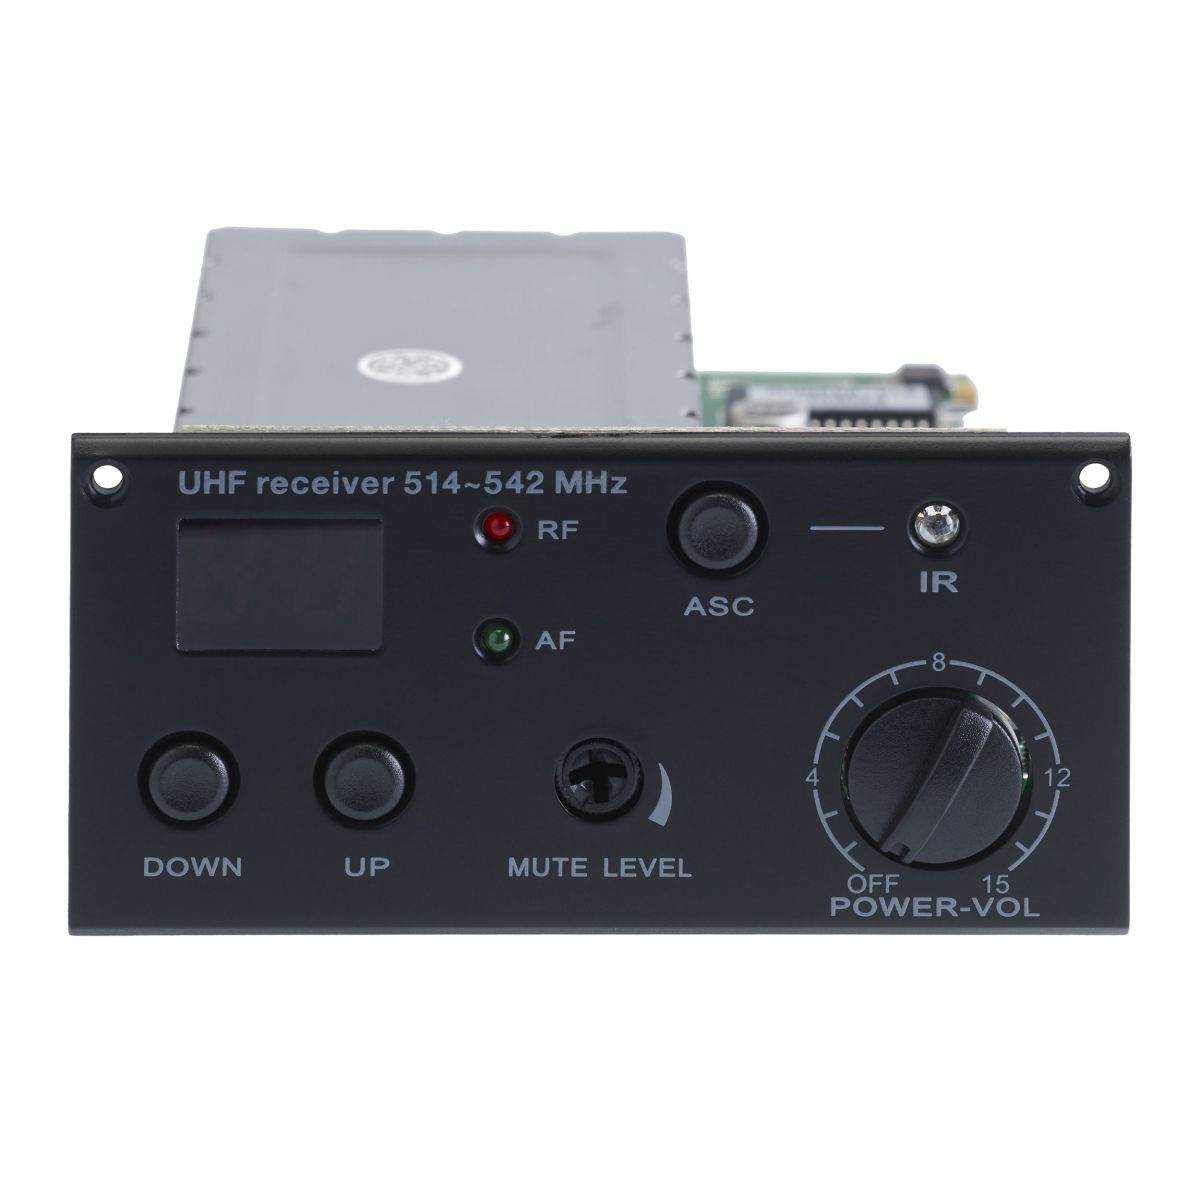 Micros sonos portables - Audiophony - Recept F5